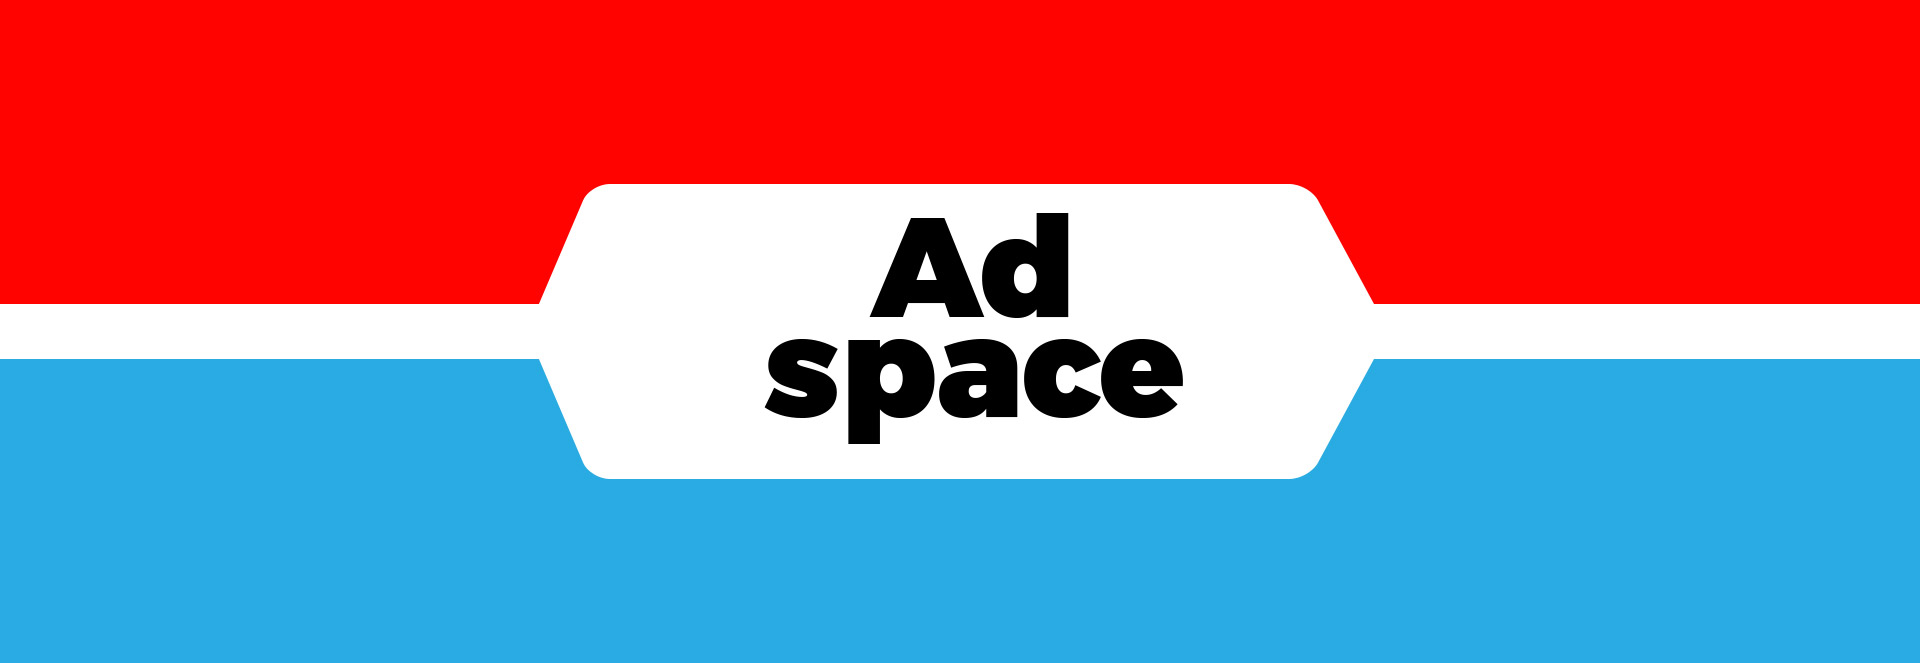 add space